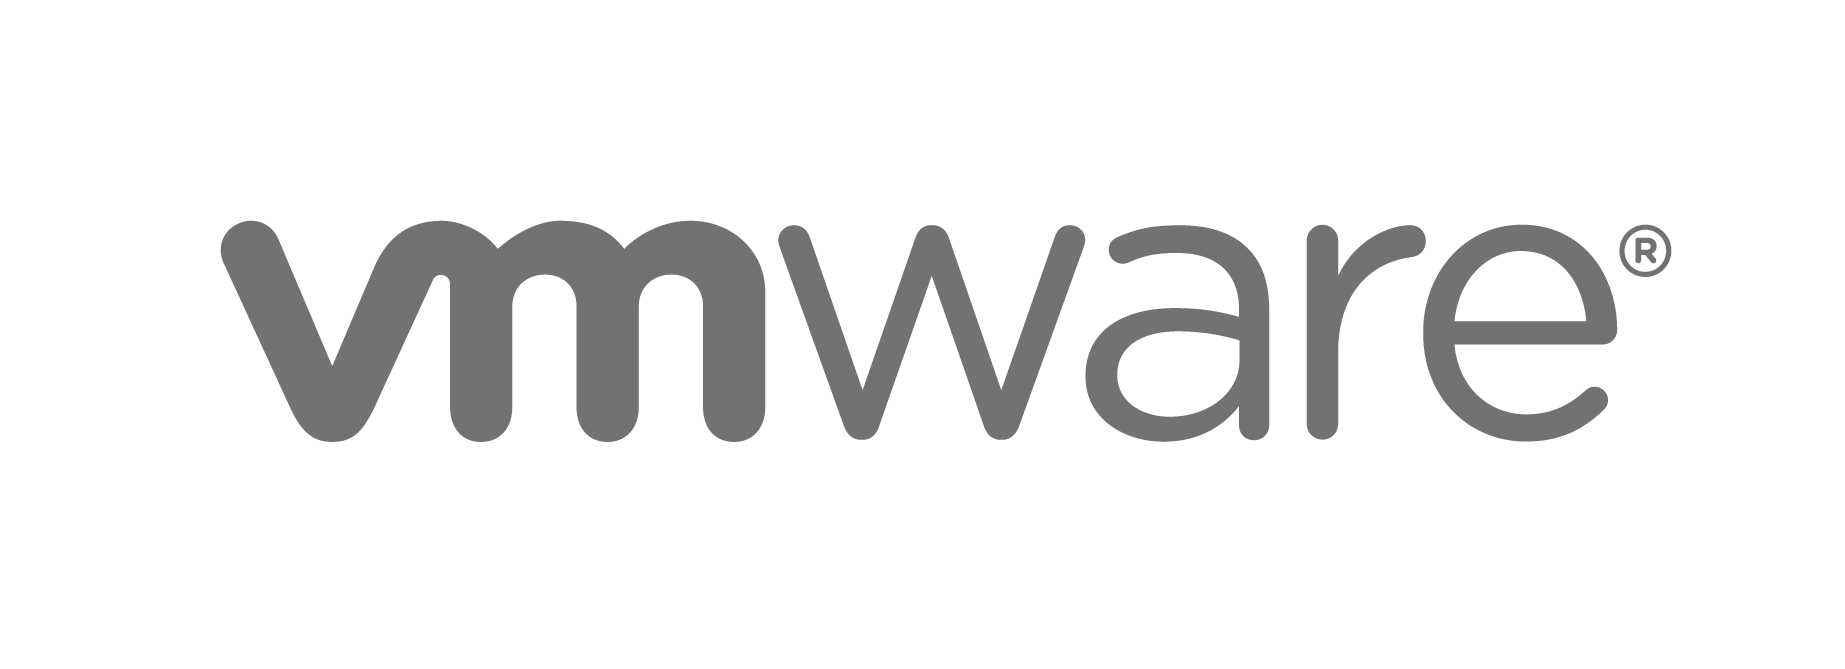 vmw-logo-vmware-logo-grey-300